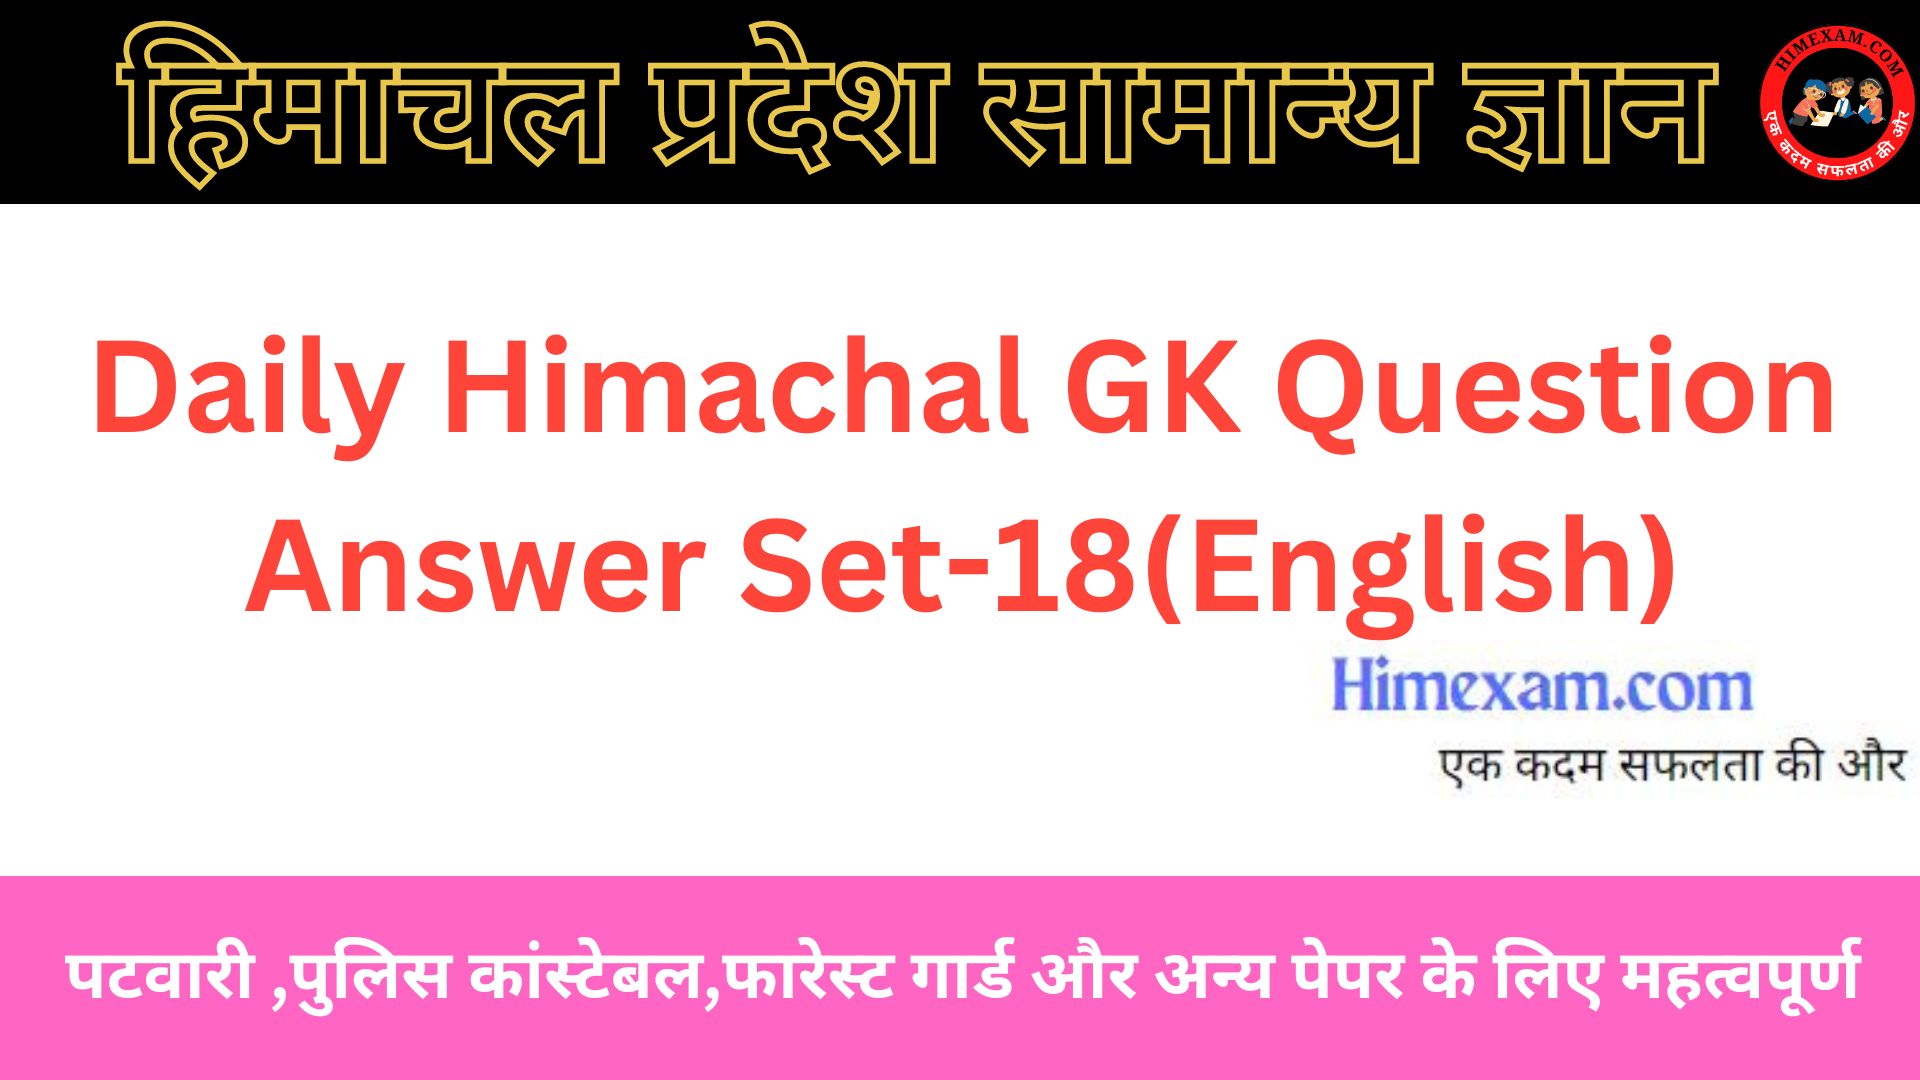 Daily HP GK Online Quiz Set-18 (English)